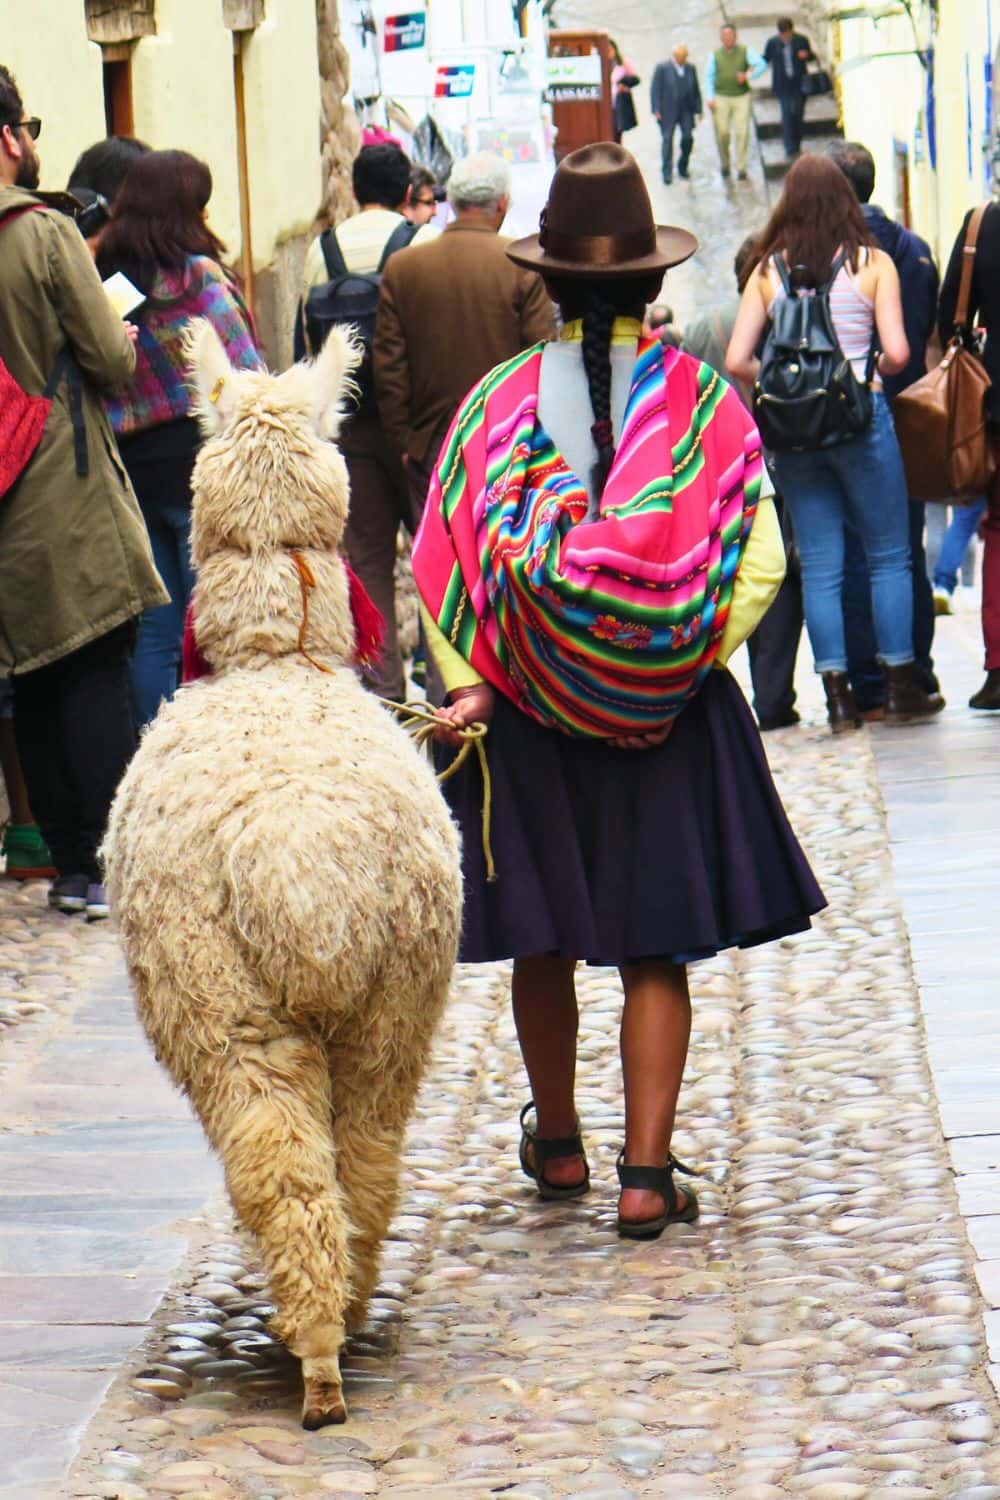 Altitude Sickness in Cusco